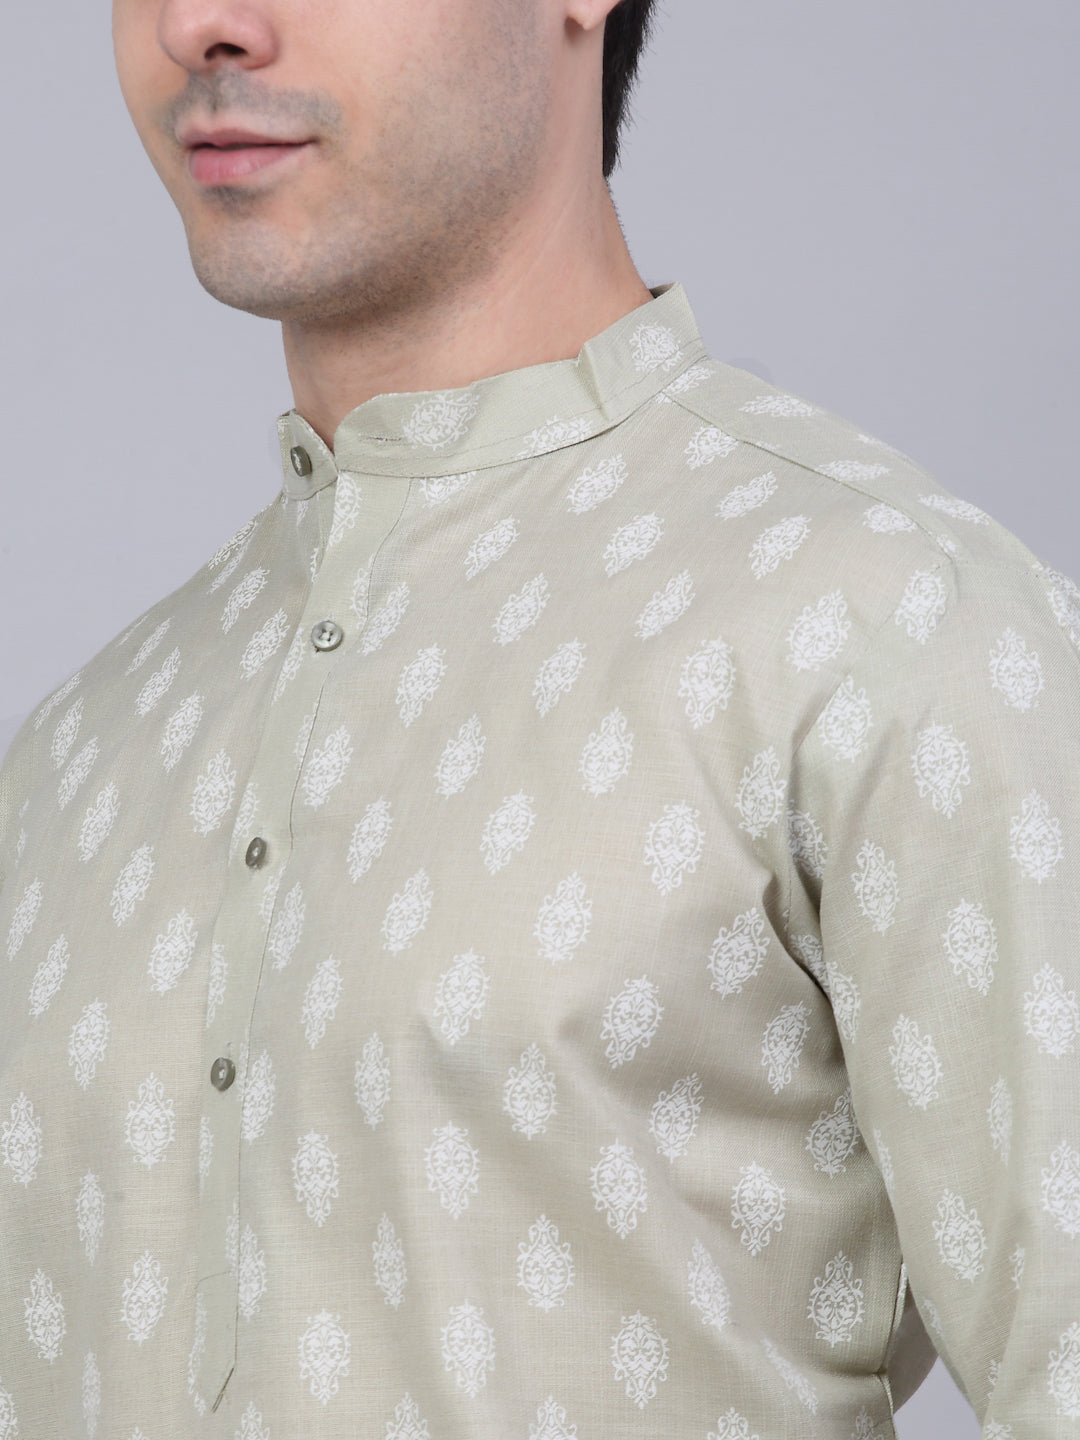 Men's Cotton Floral printed kurta Pyjama Set ( JOKP 650Grey )